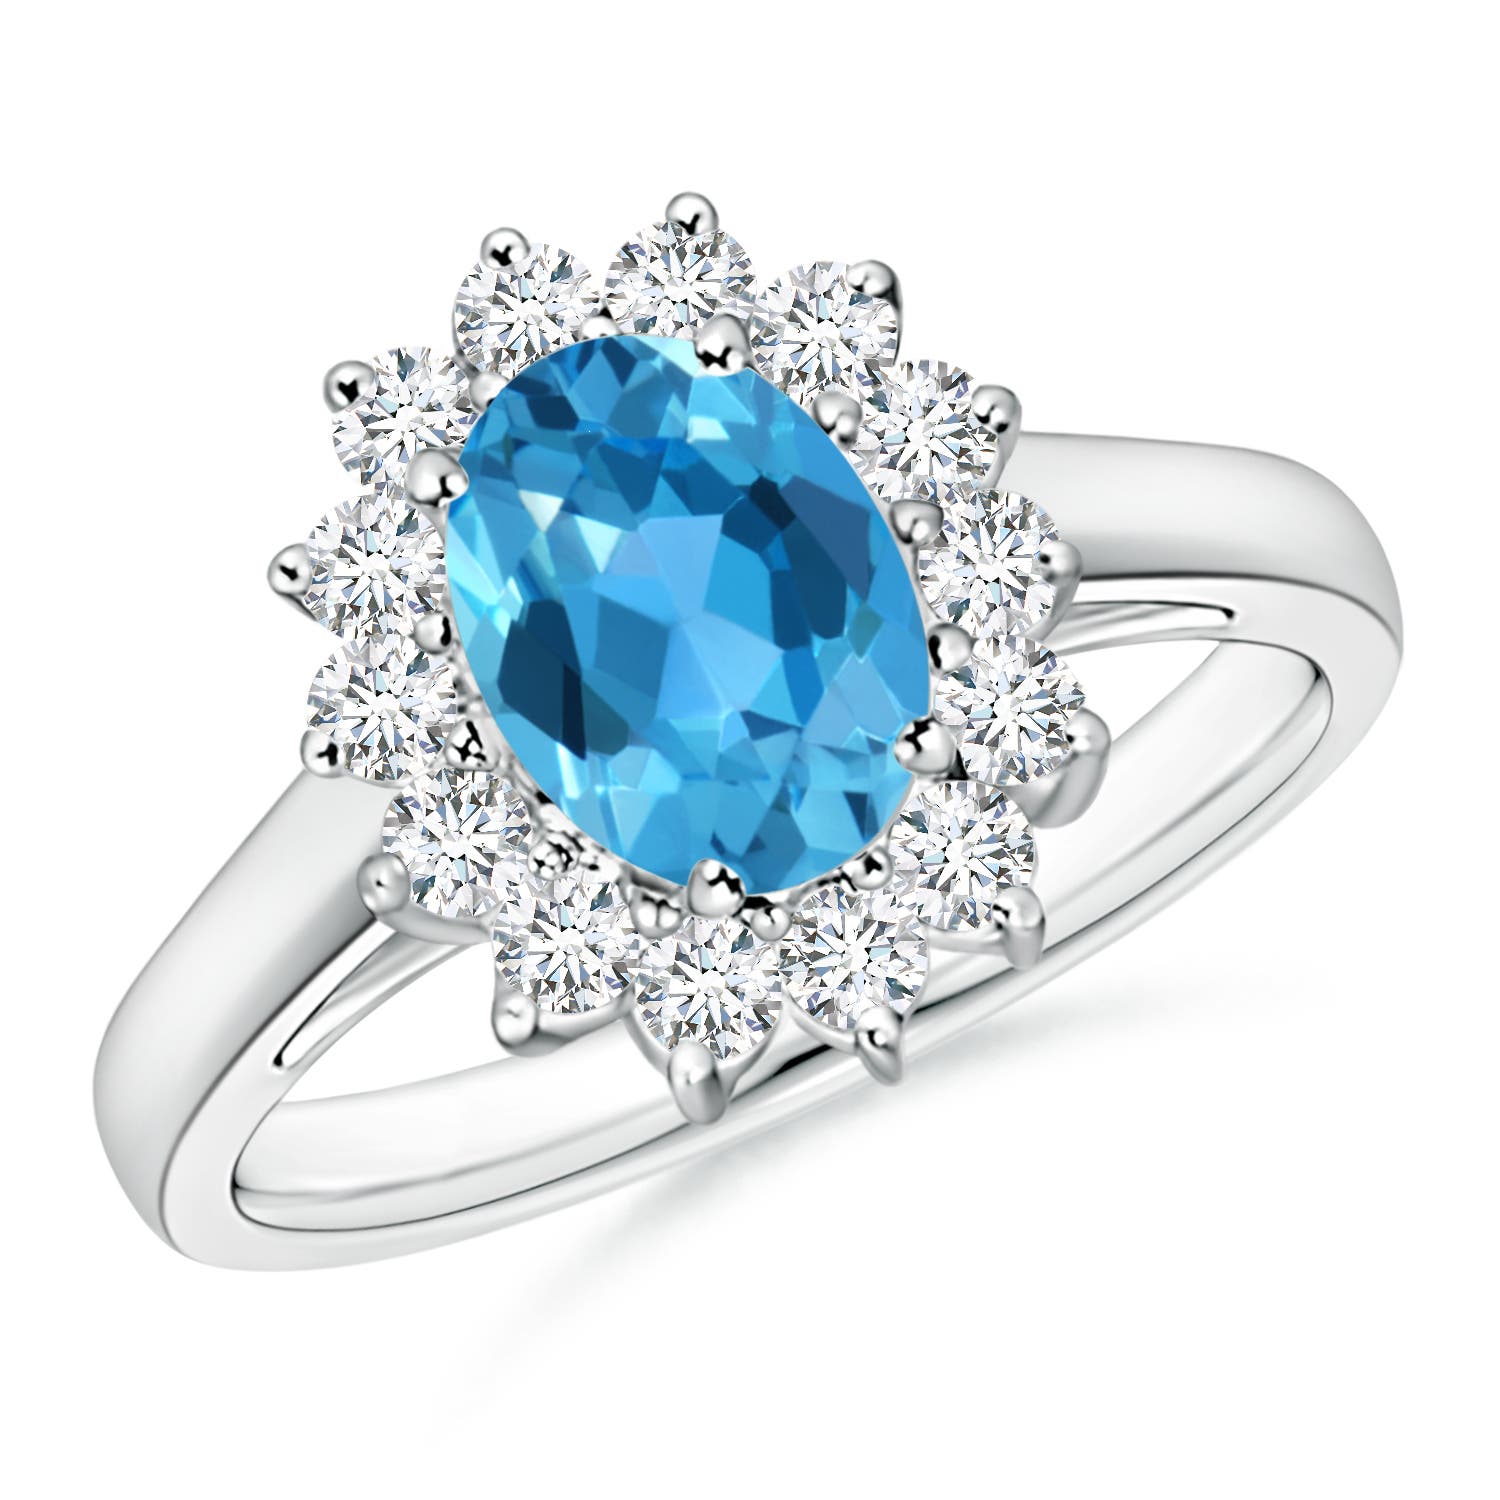 Princess Diana Inspired Swiss Blue Topaz Ring with Halo | Angara